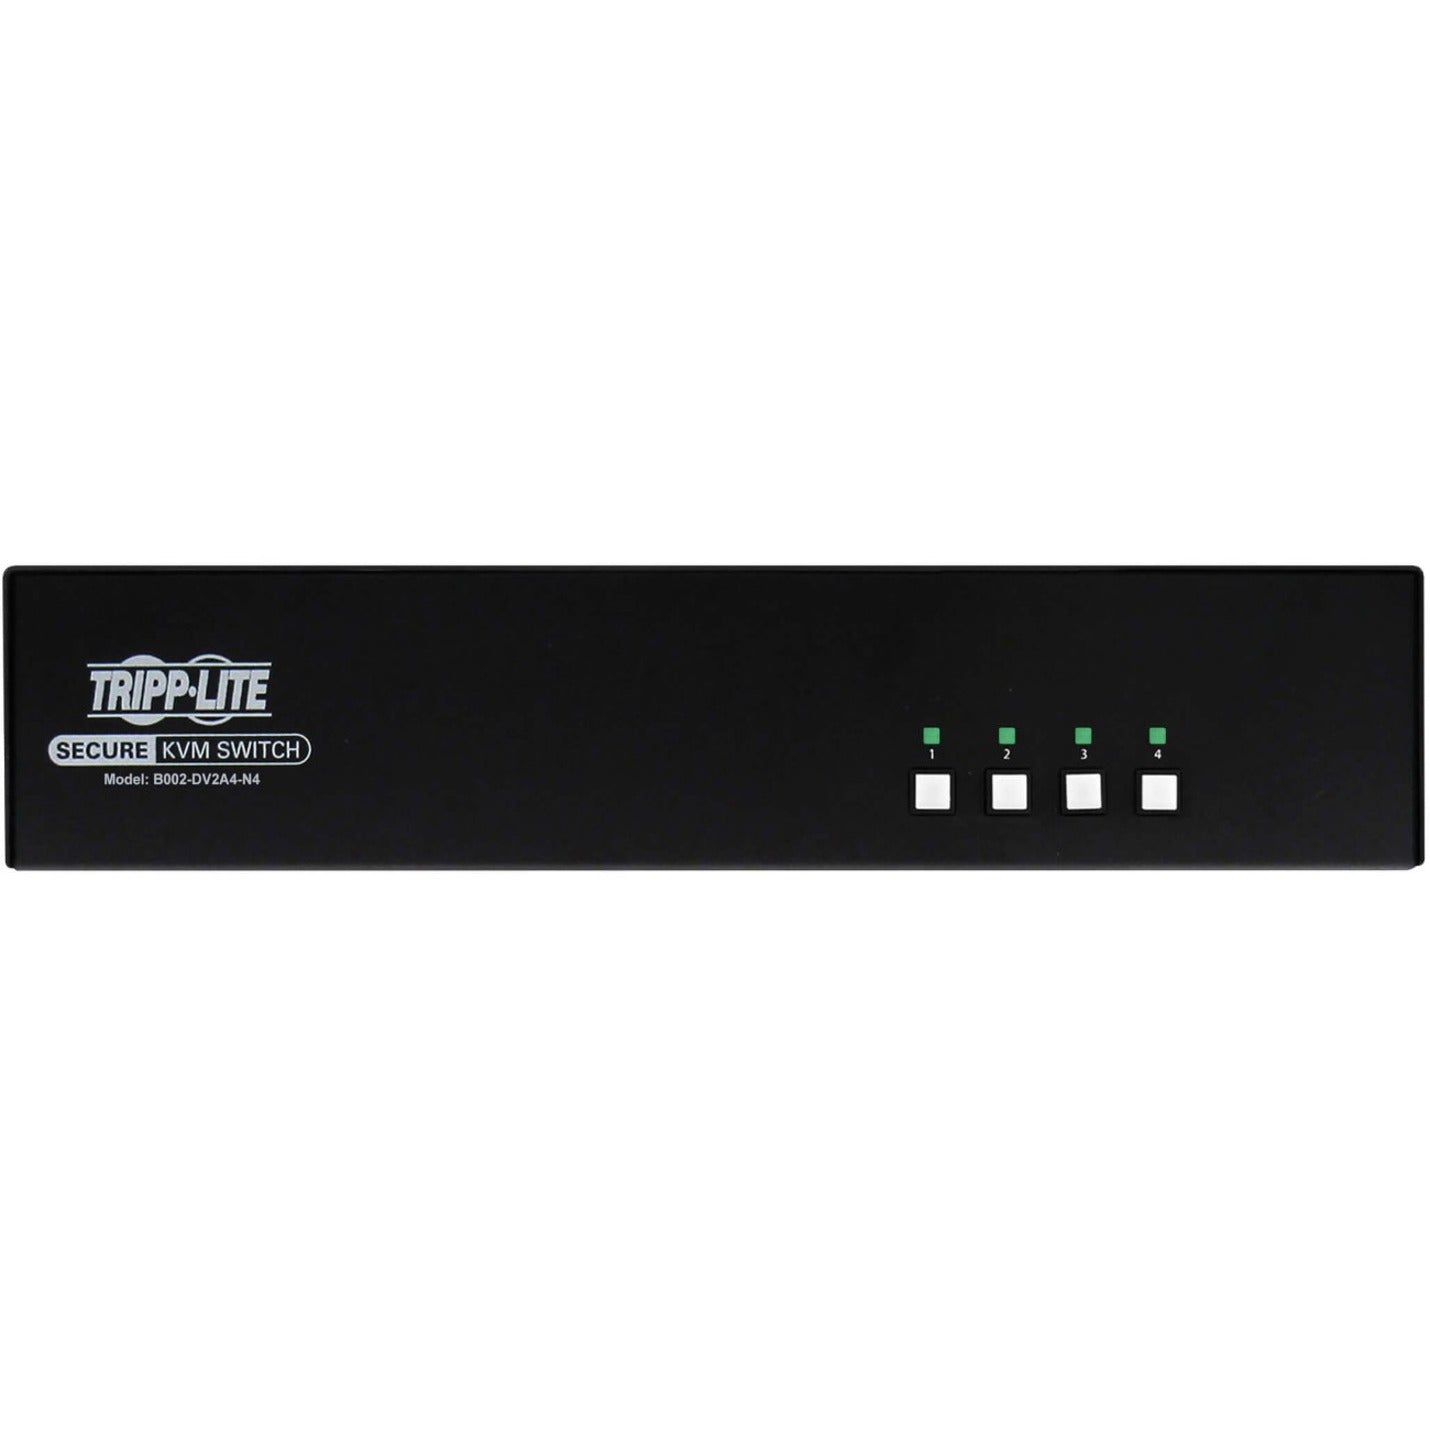 Tripp Lite B002-DV2A4-N4 Secure KVM Switch 4-Port Dual-Head DVI to DVI NIAP PP4.0 TAA Maximum Video Resolution 2560 x 1600 3 Year Warranty